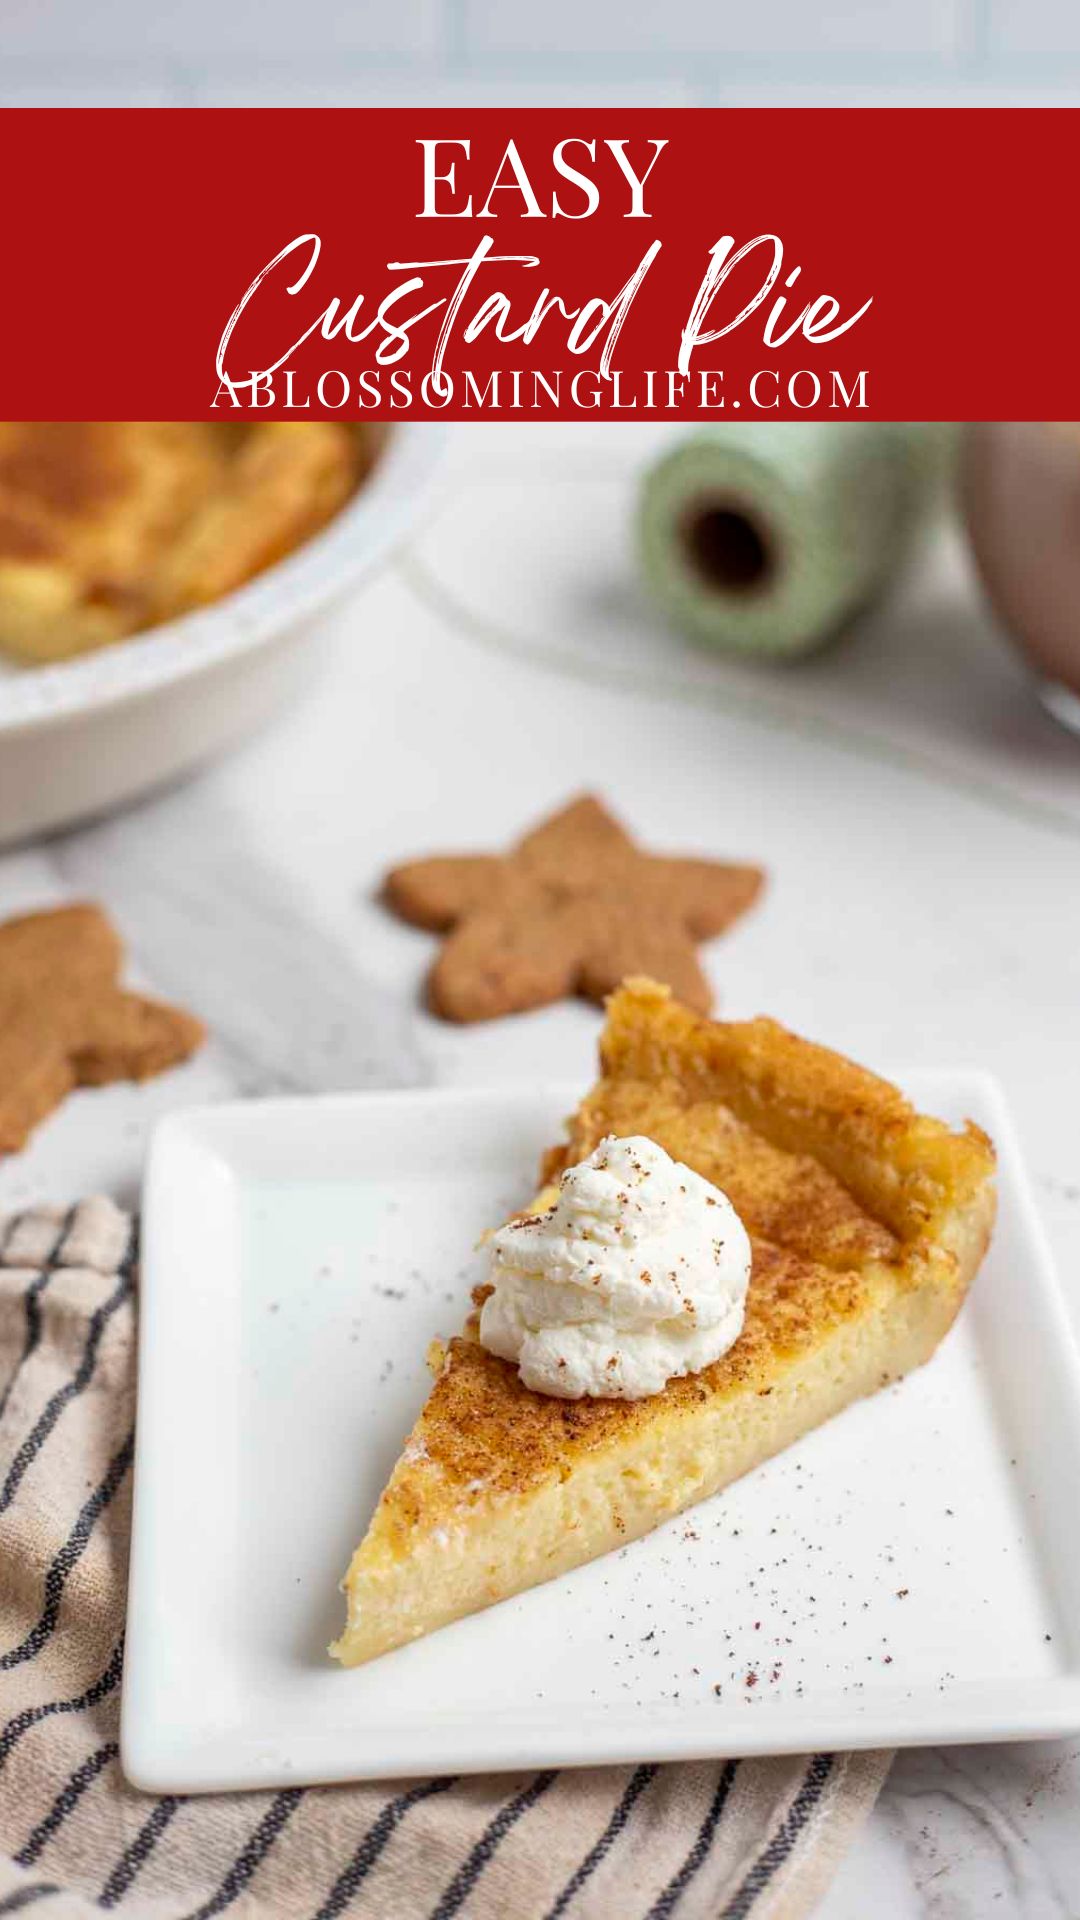 Simple Custard Pie Recipe - A Blossoming Life